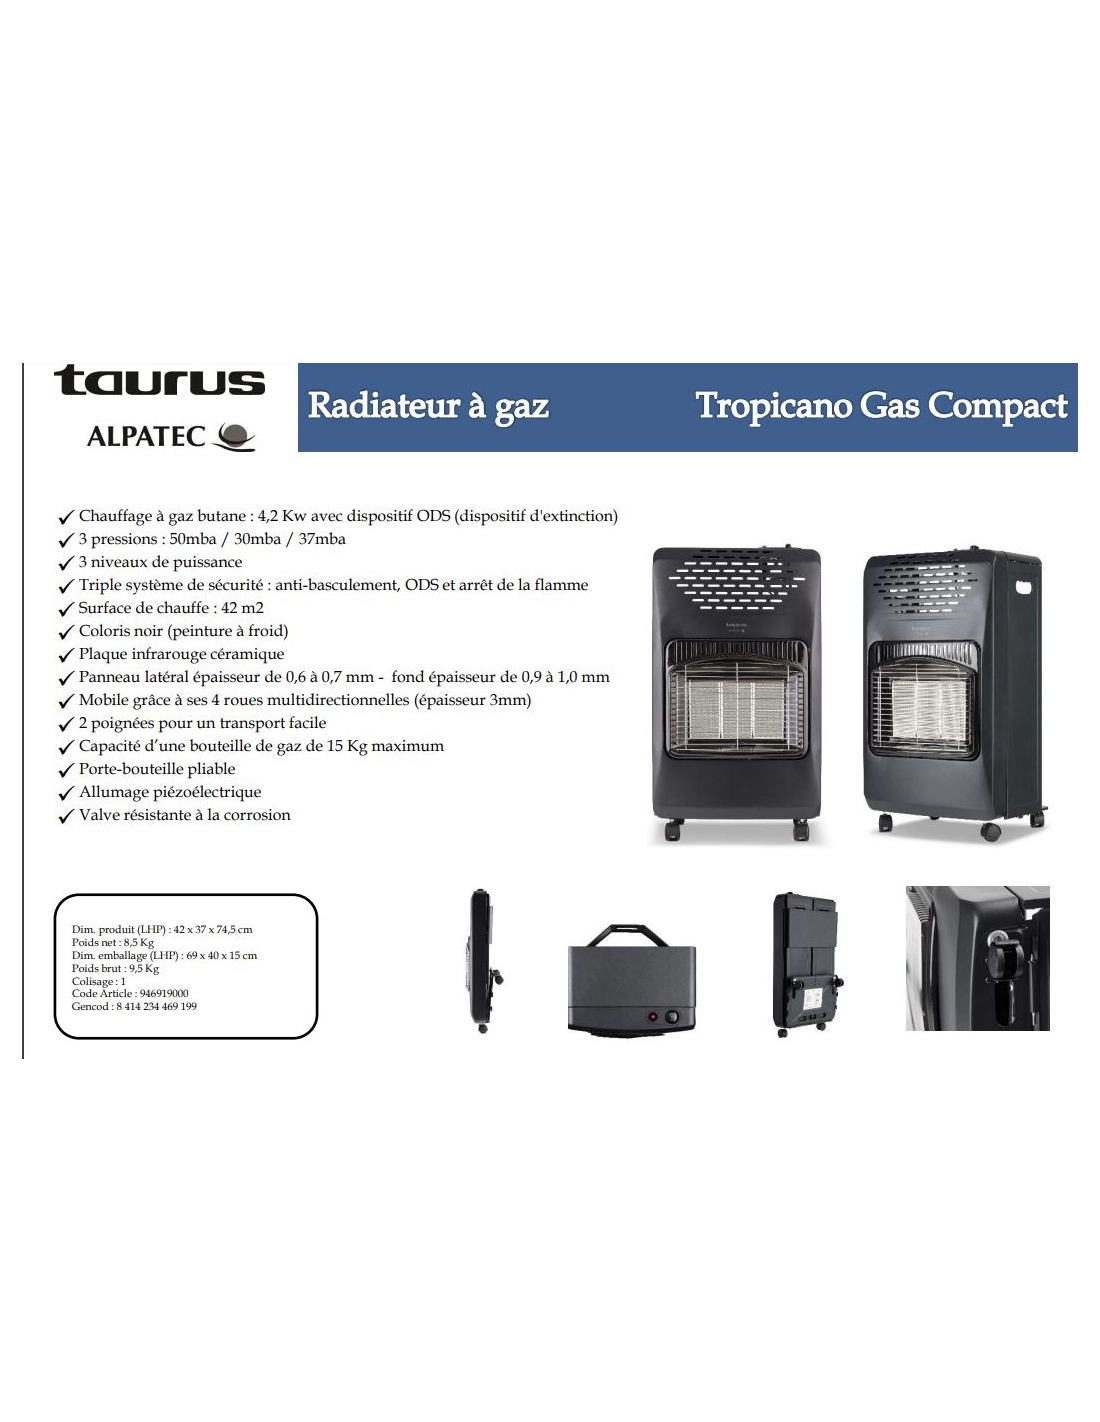 TROPICANO GAS COMPACT – Taurus